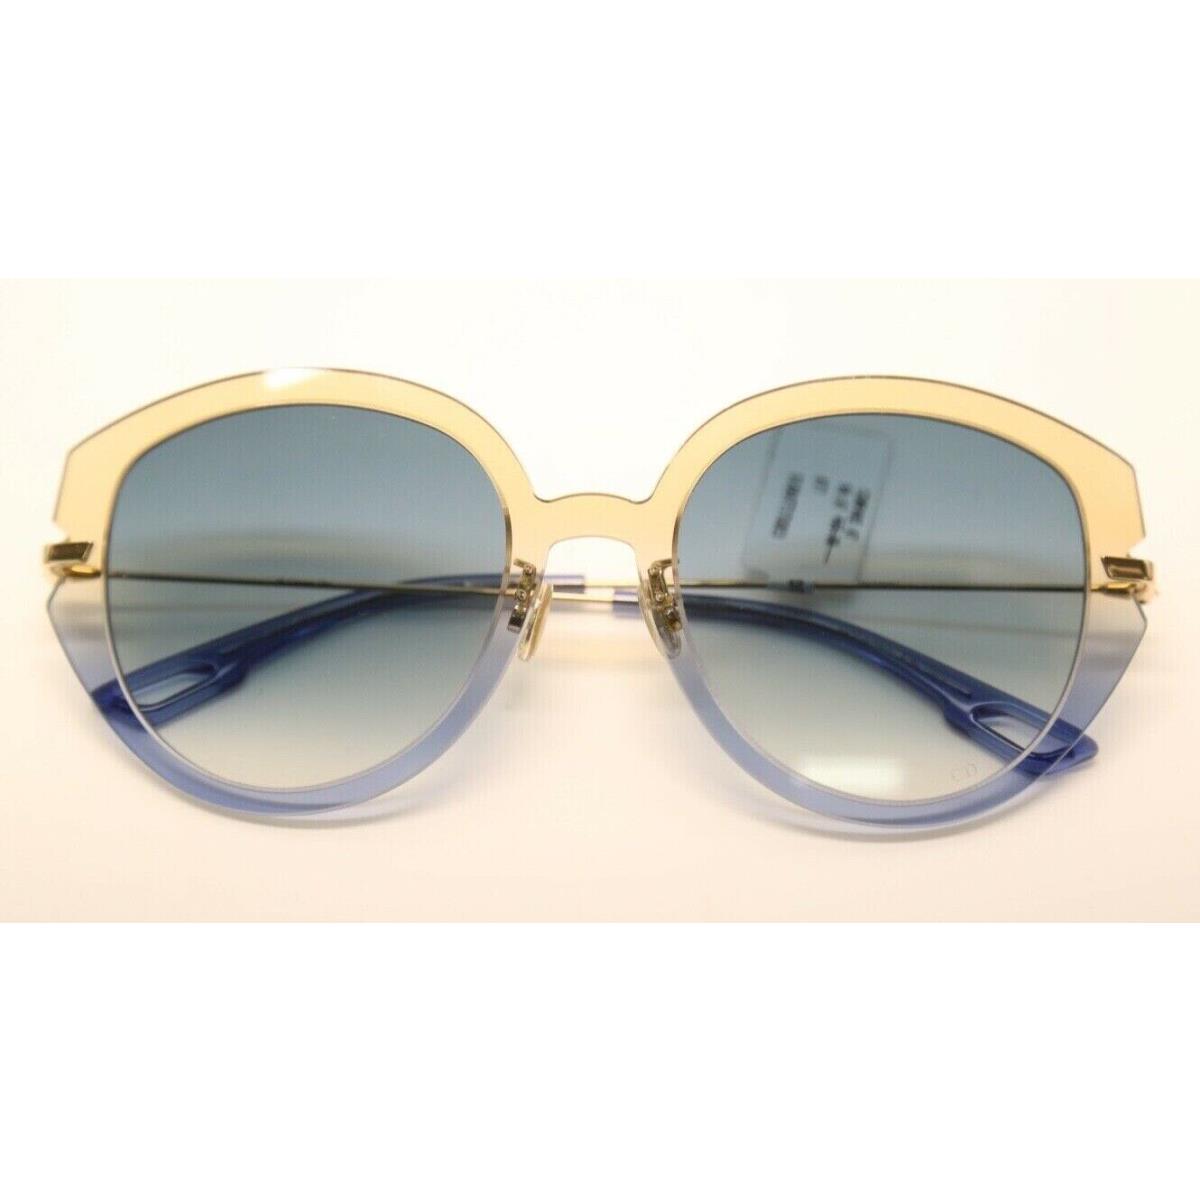 Christian Dior 2493 30  Vintage Christian Dior Sunglasses  NOS  Retro  Spectacle